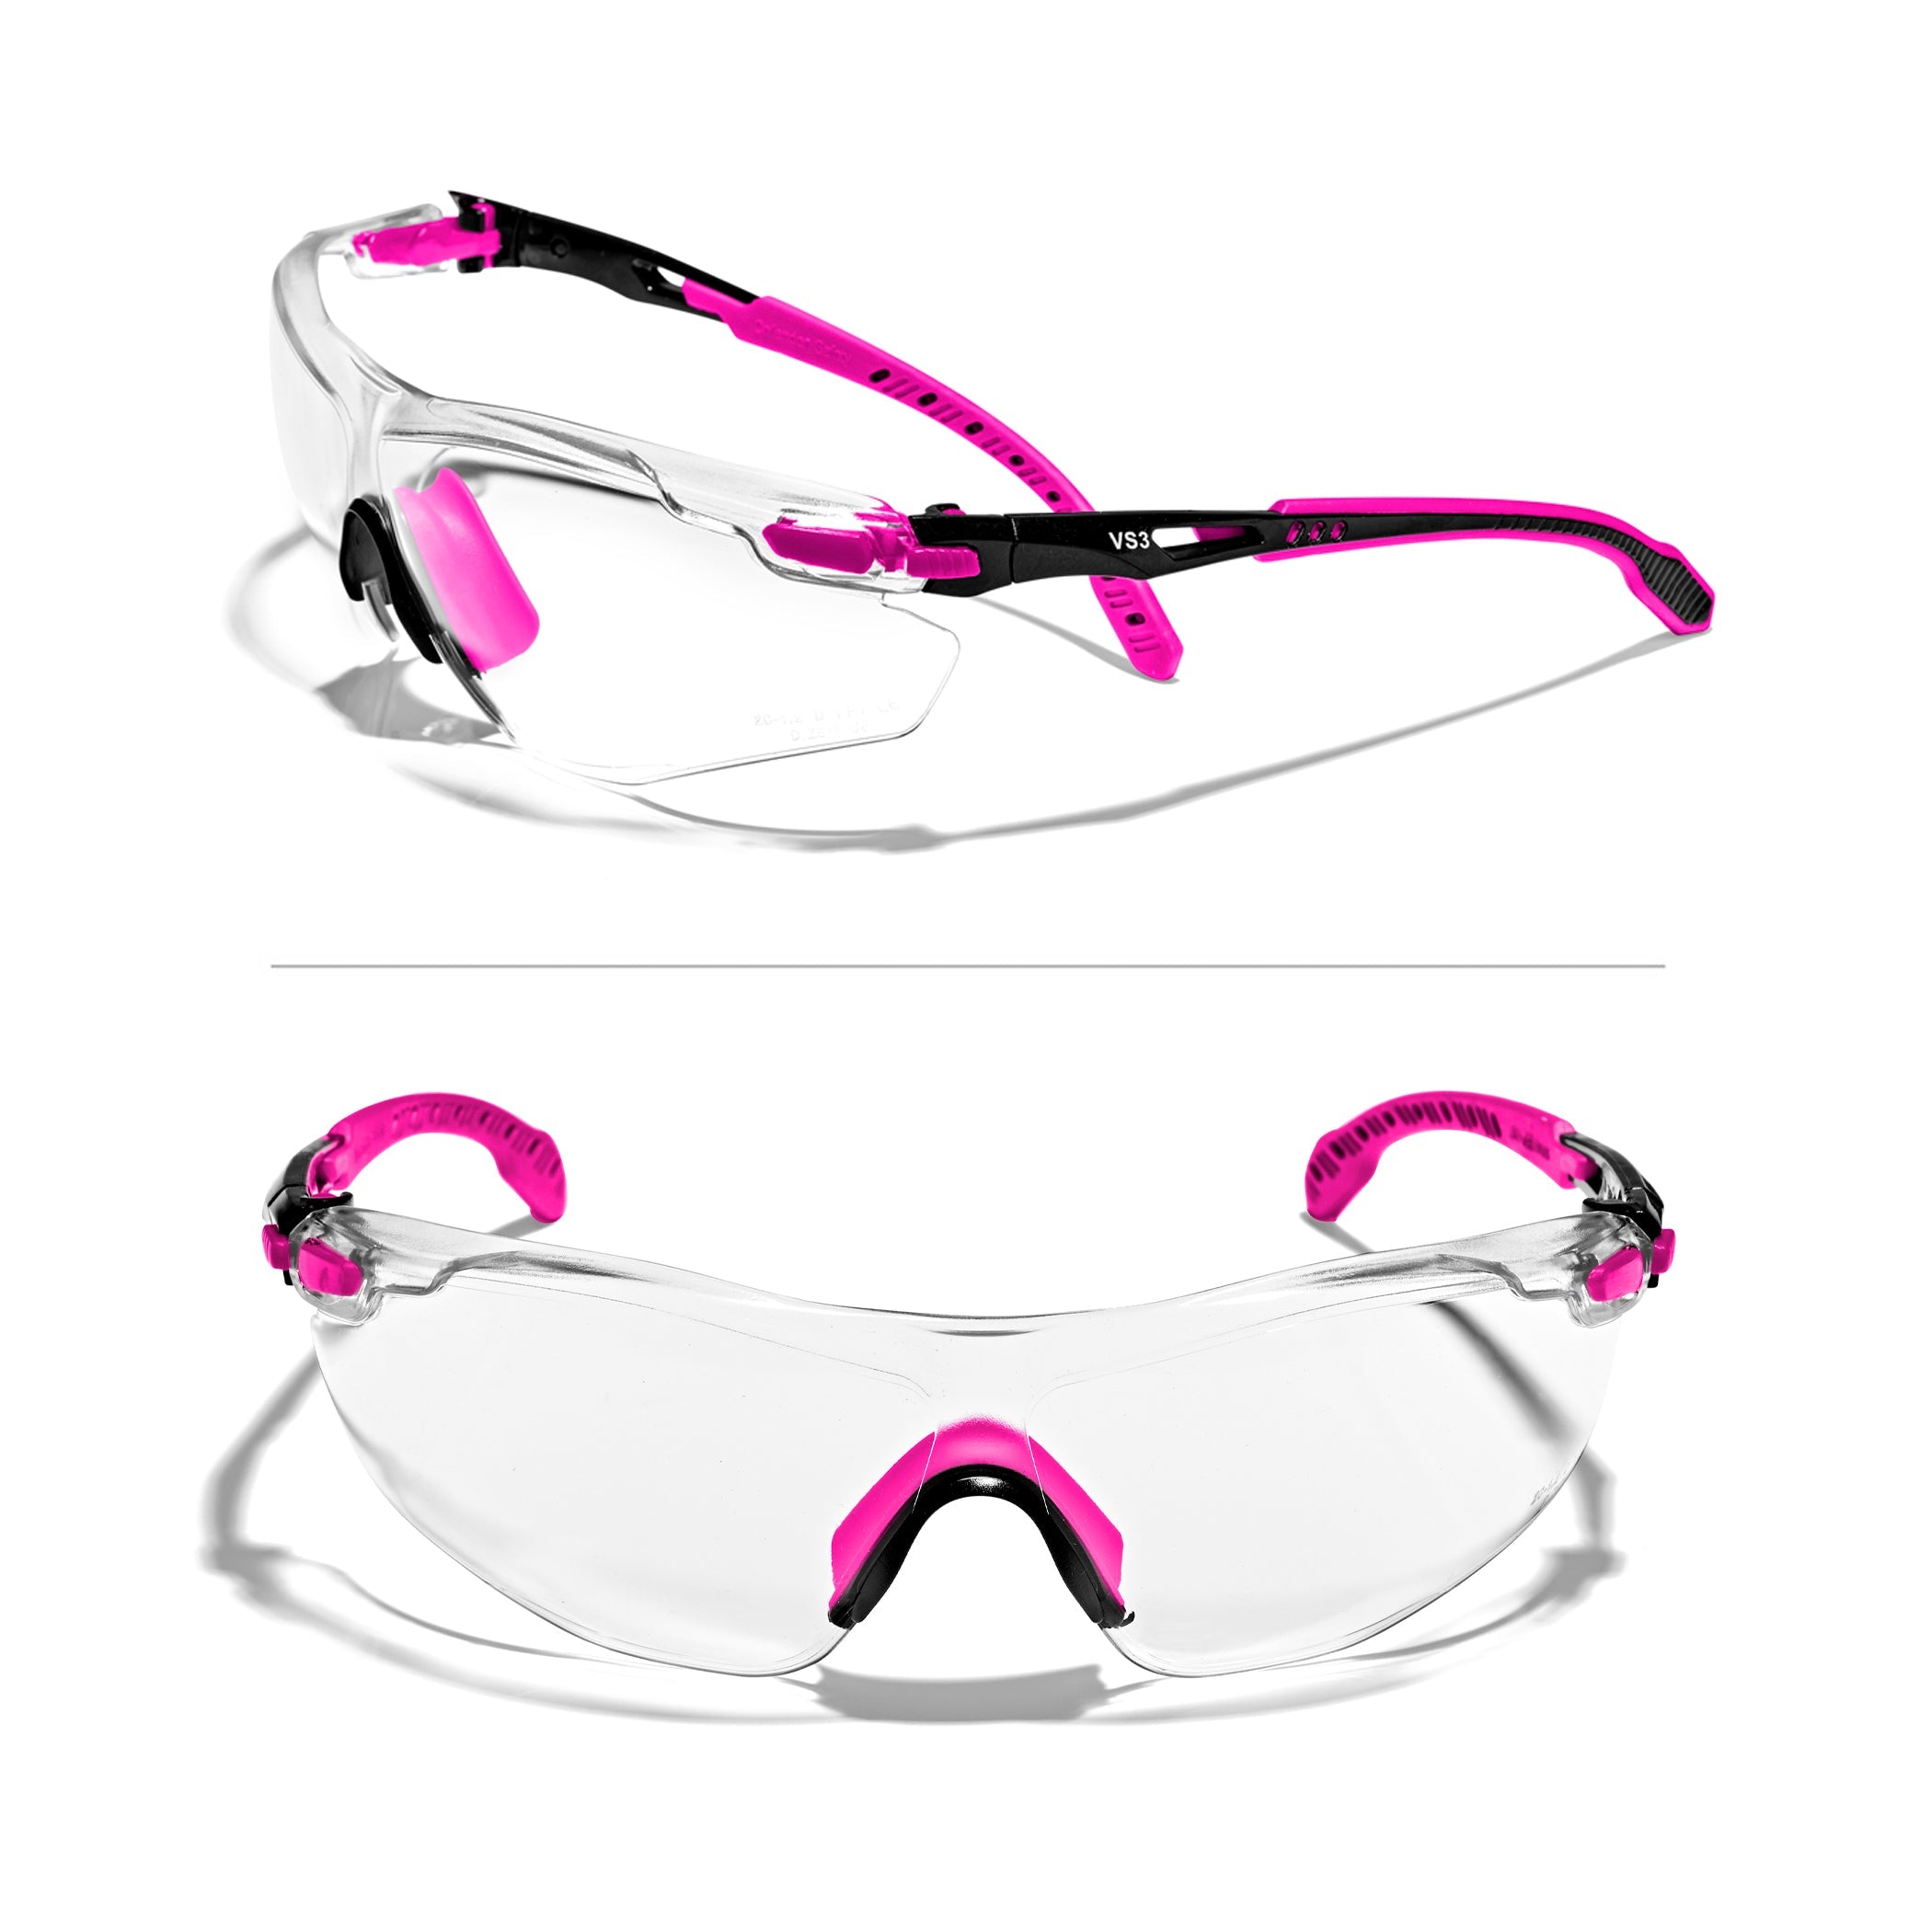 OPTIFENSE™ VS3 Anti Fog, Premium CLEAR Safety Glasses, ANSI Z87+